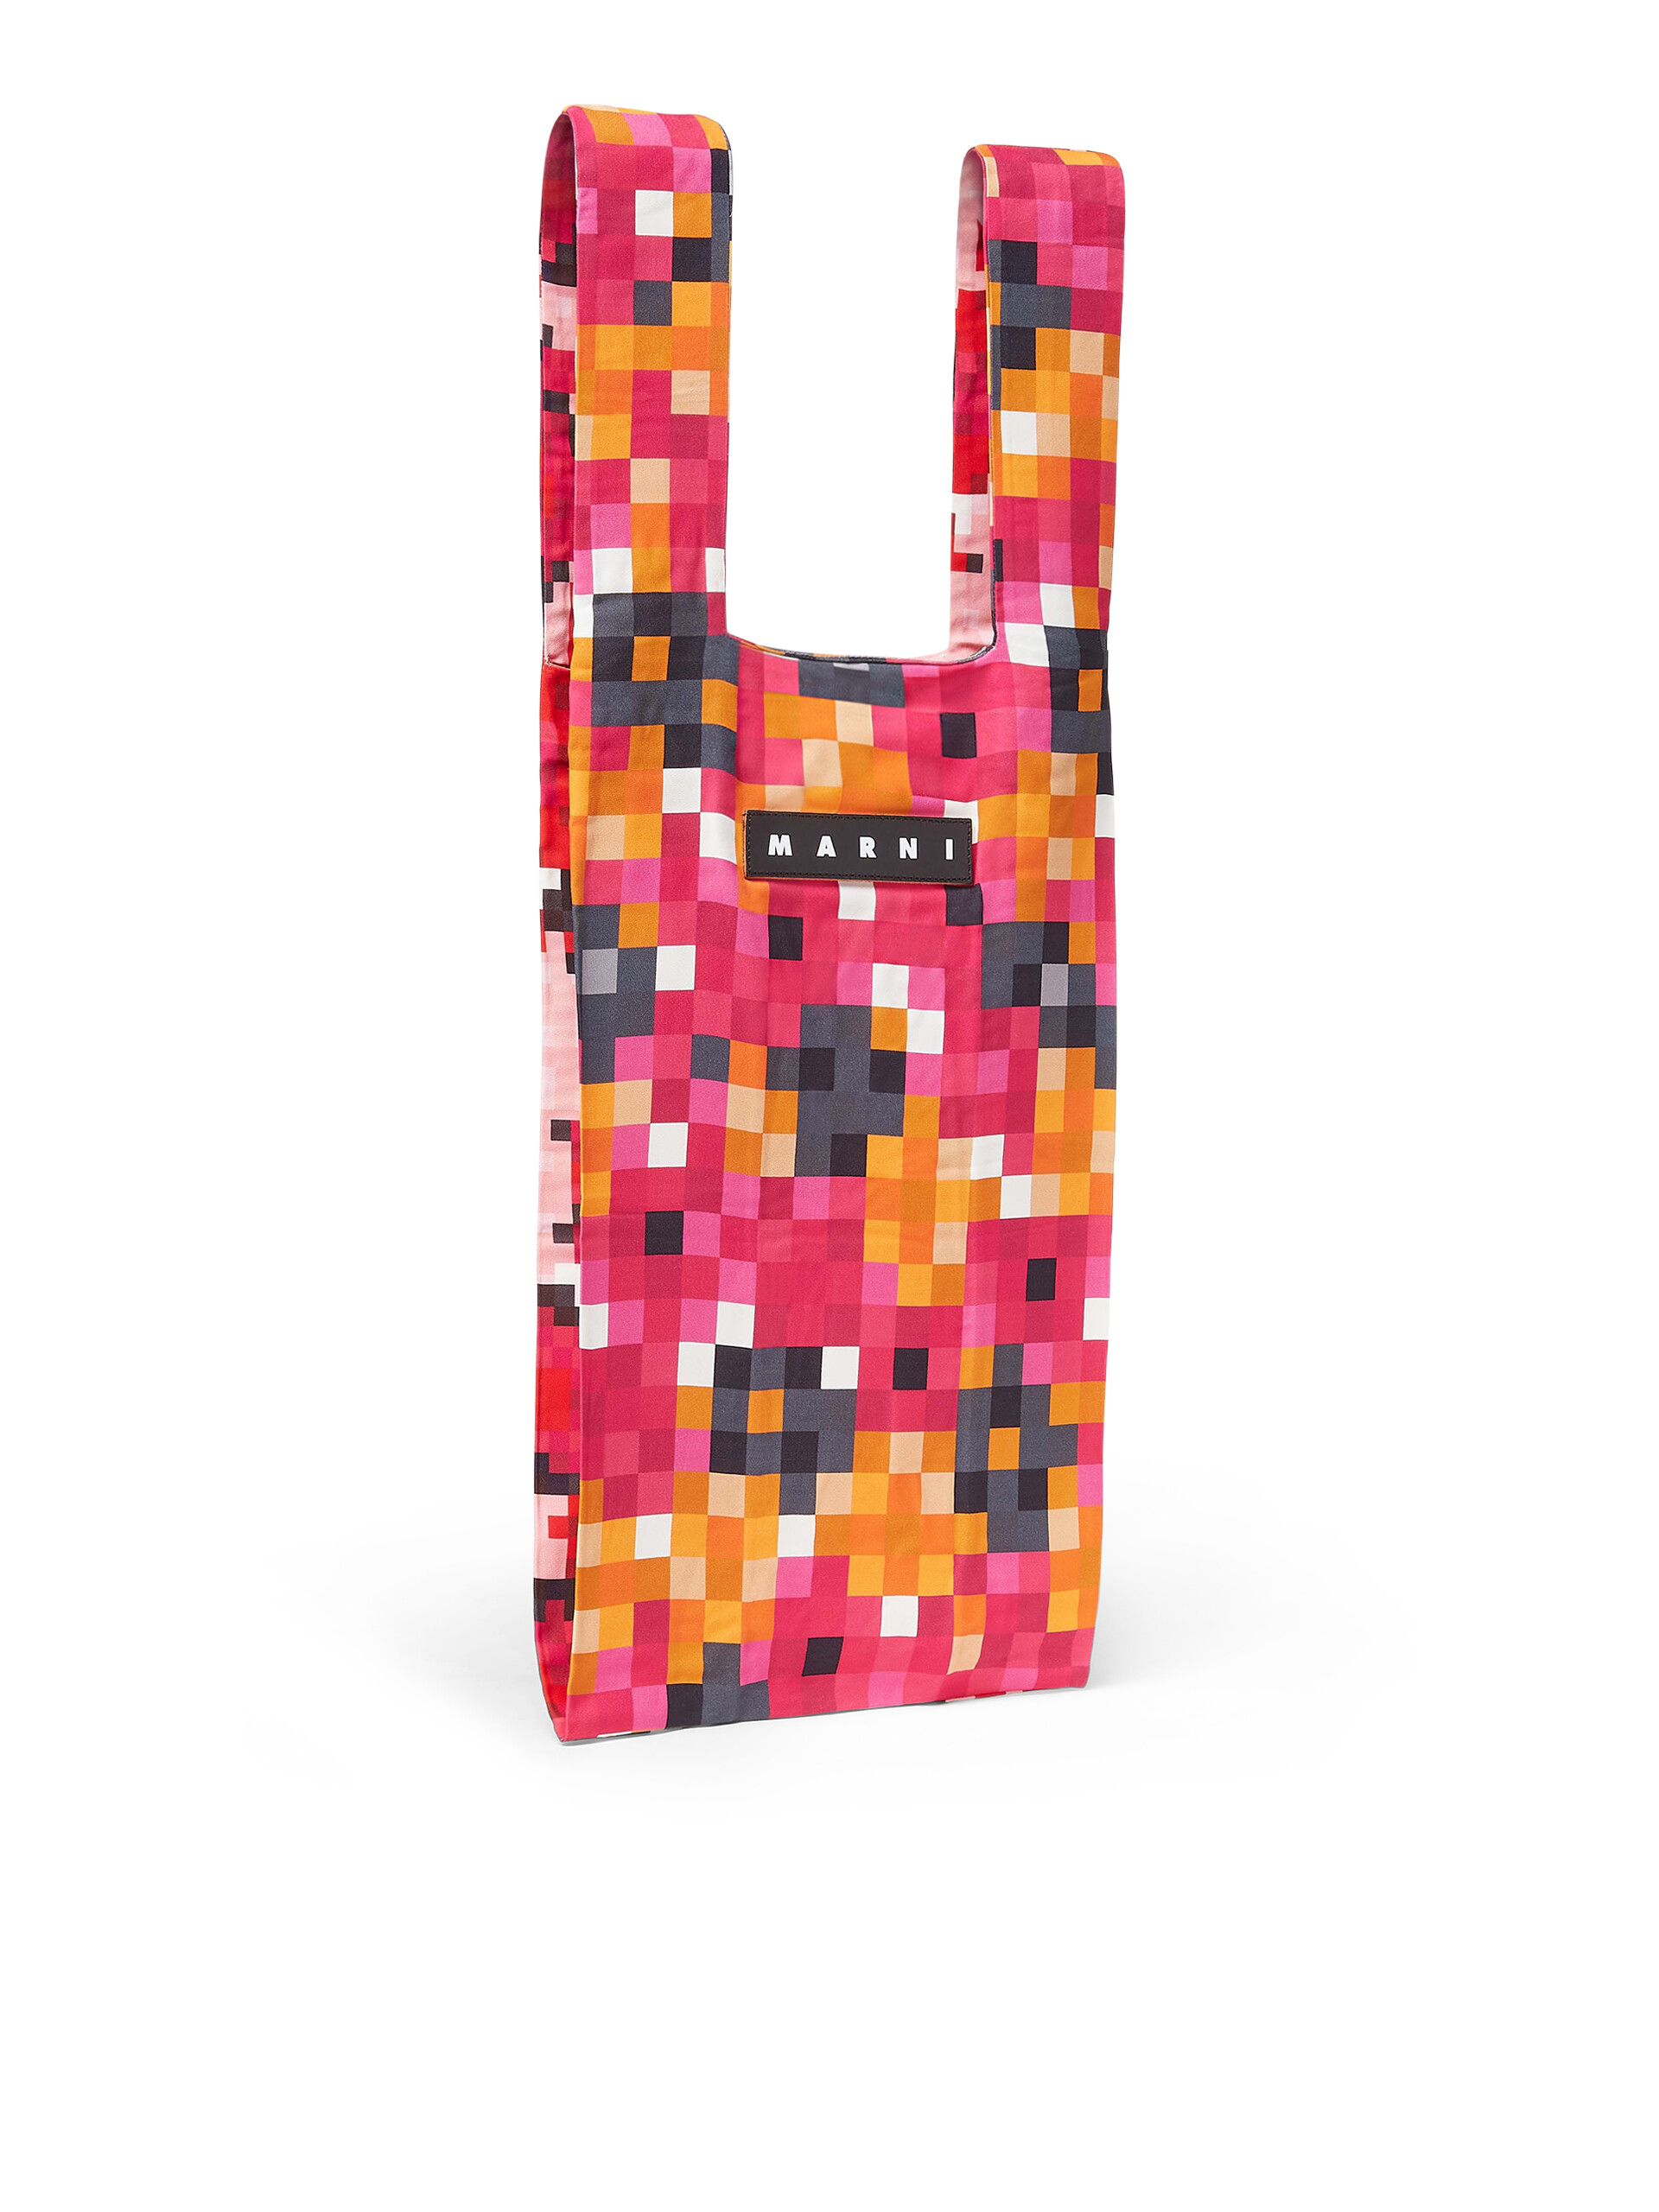 MARNI MARKET shopping bag with pixel print - Shopping Bags - Image 2